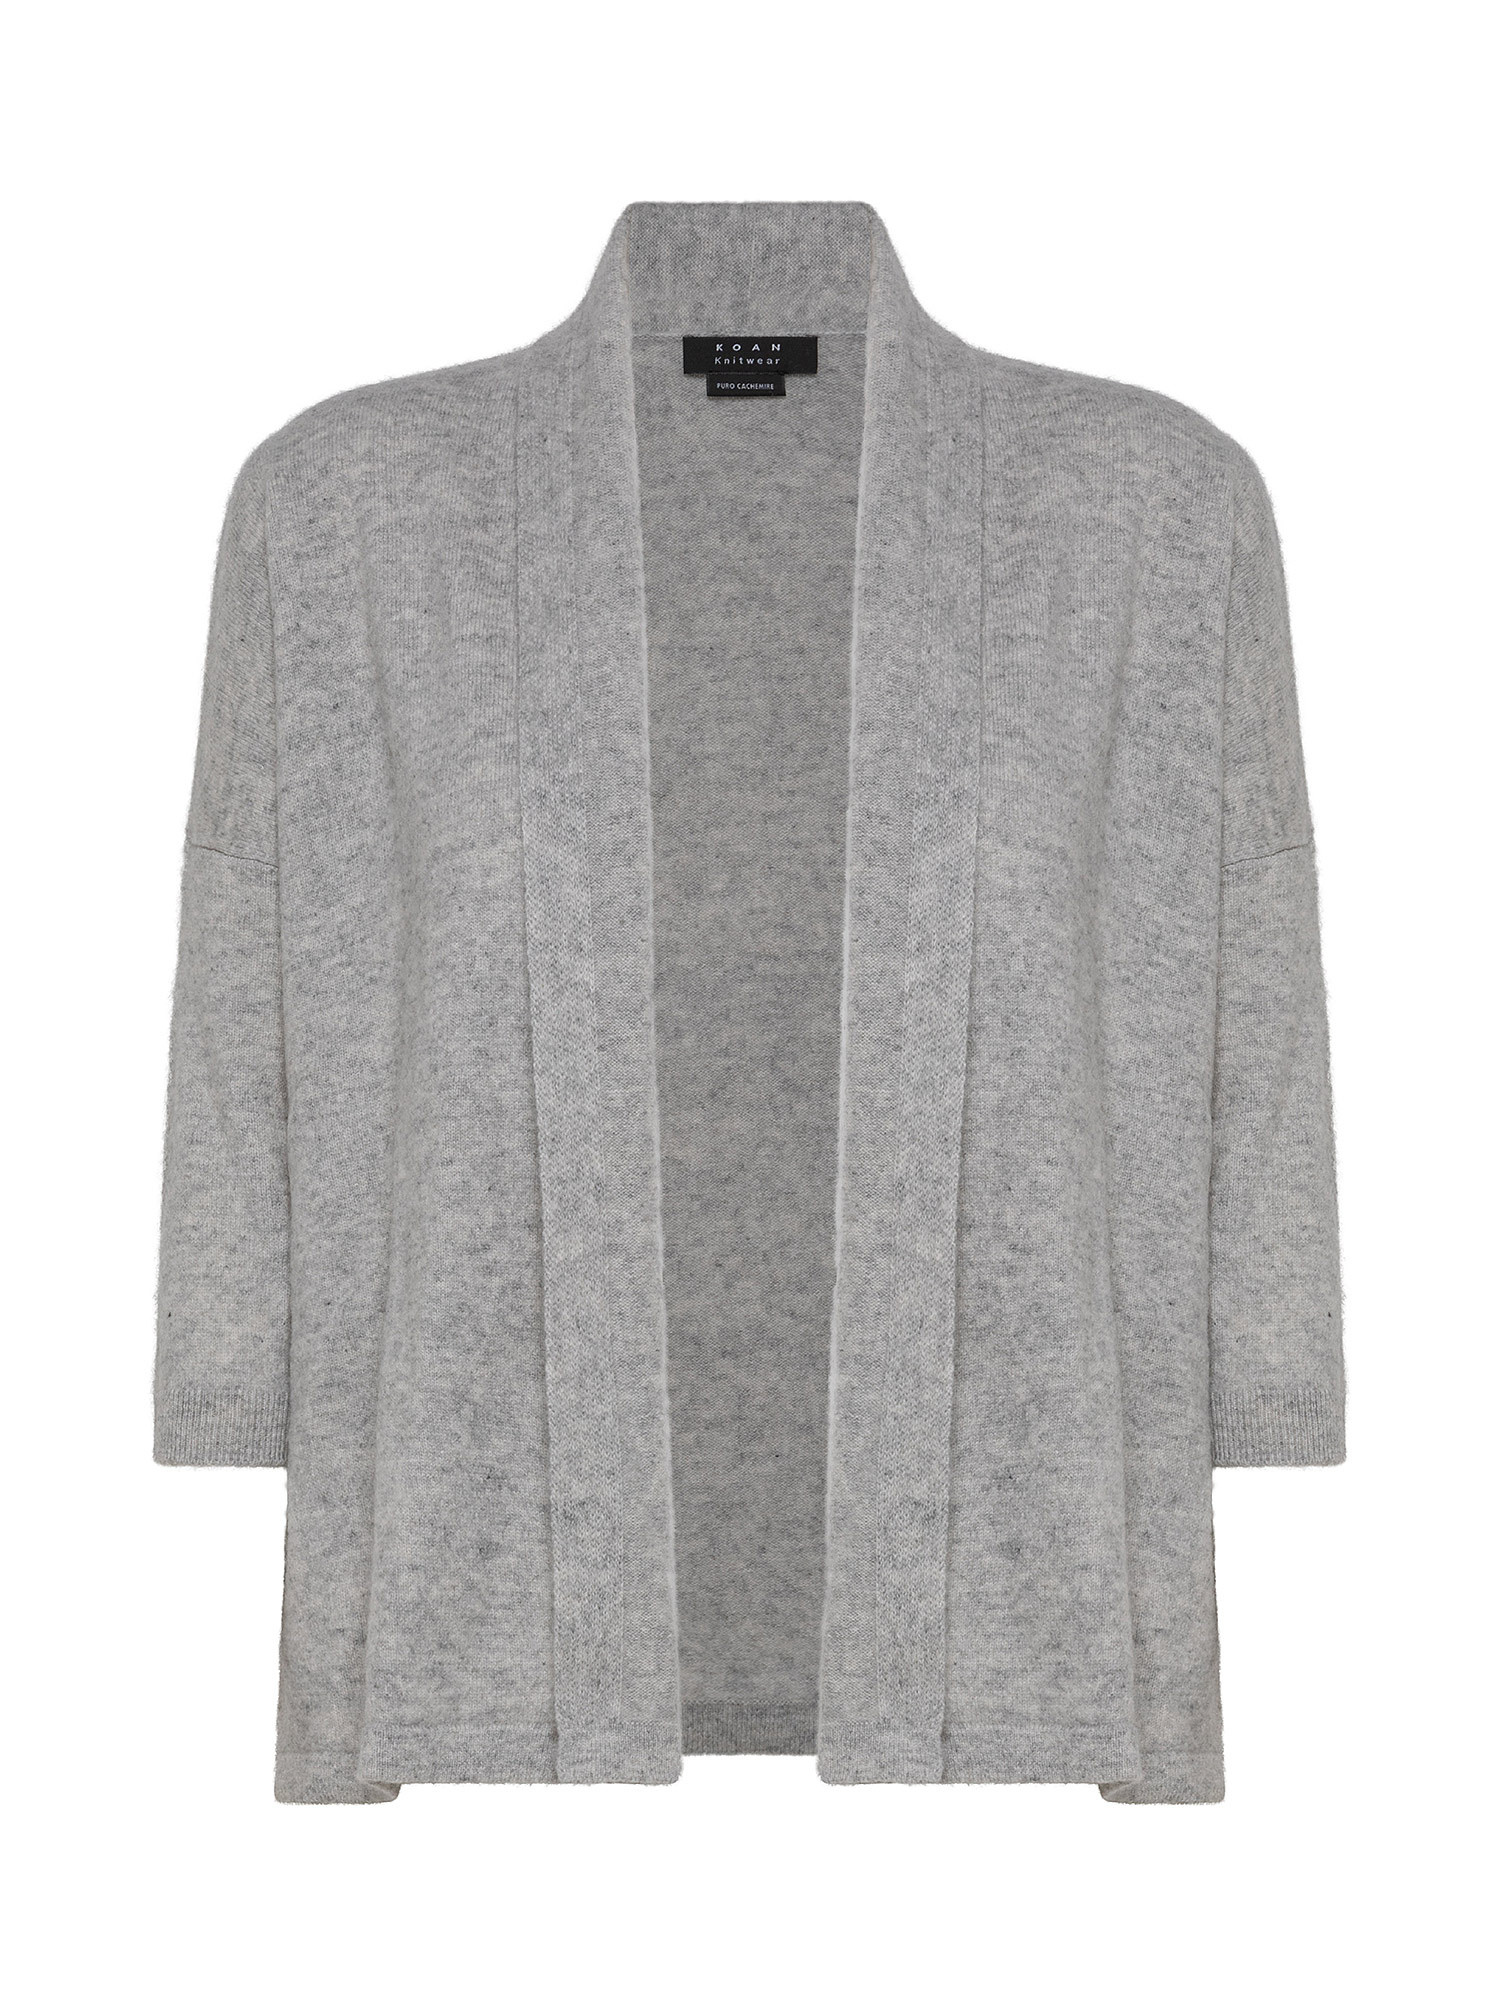 Cashmere cardigan, Grey, large image number 0